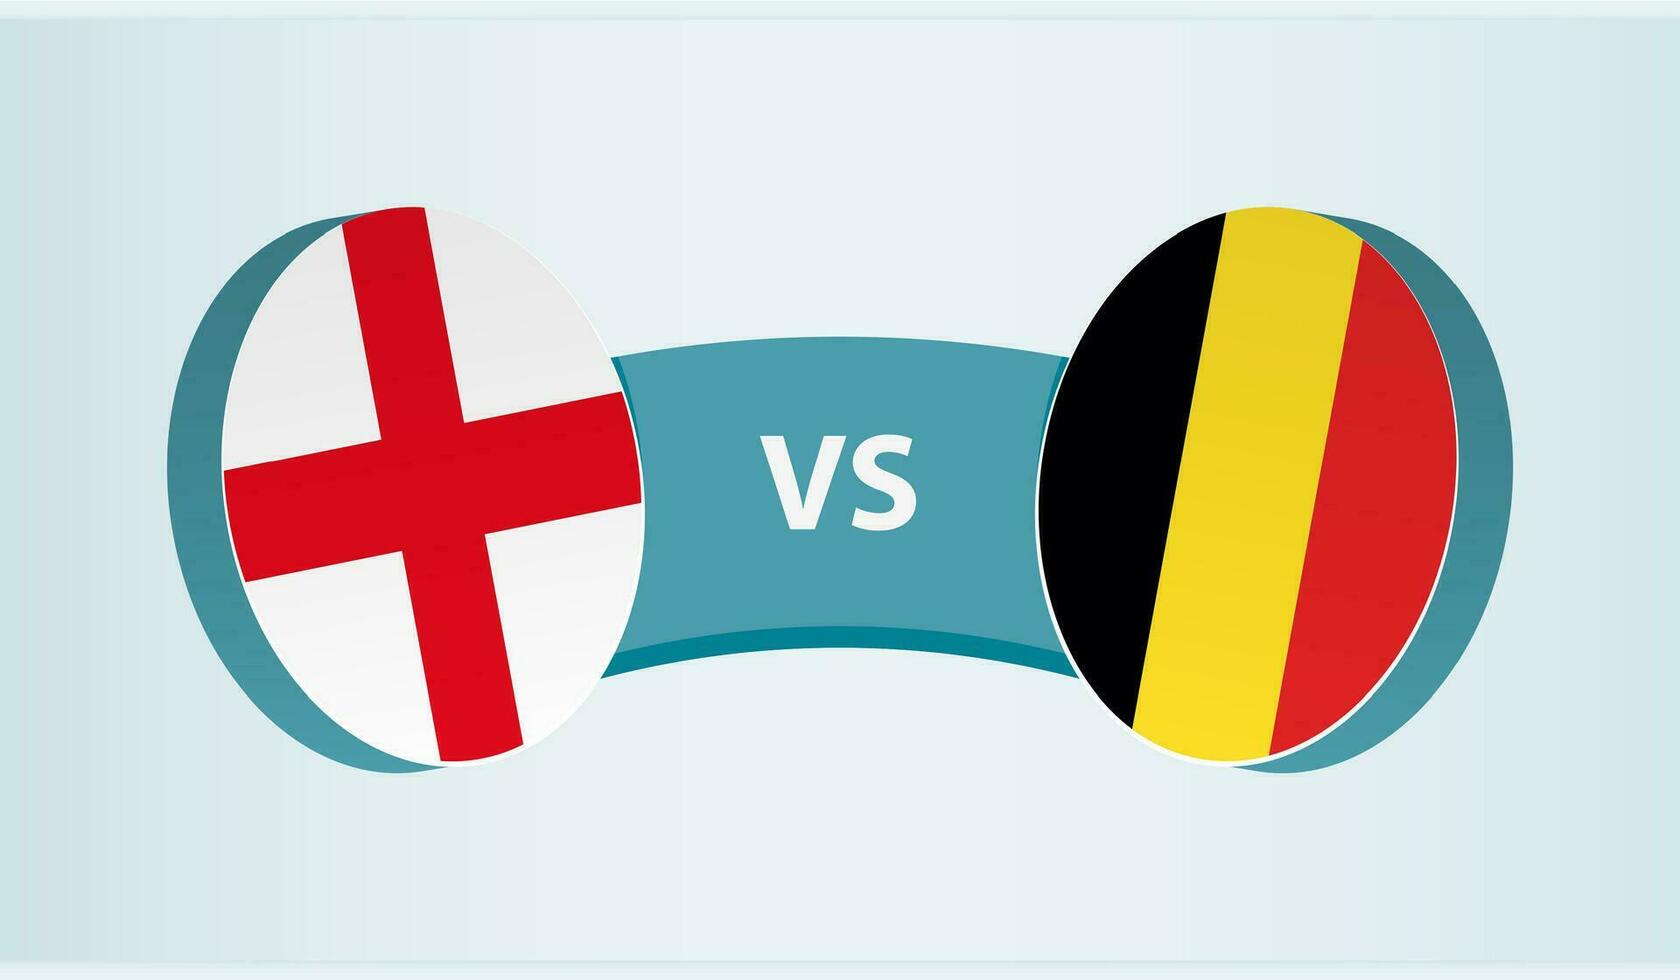 England versus Belgium, team sports competition concept. vector